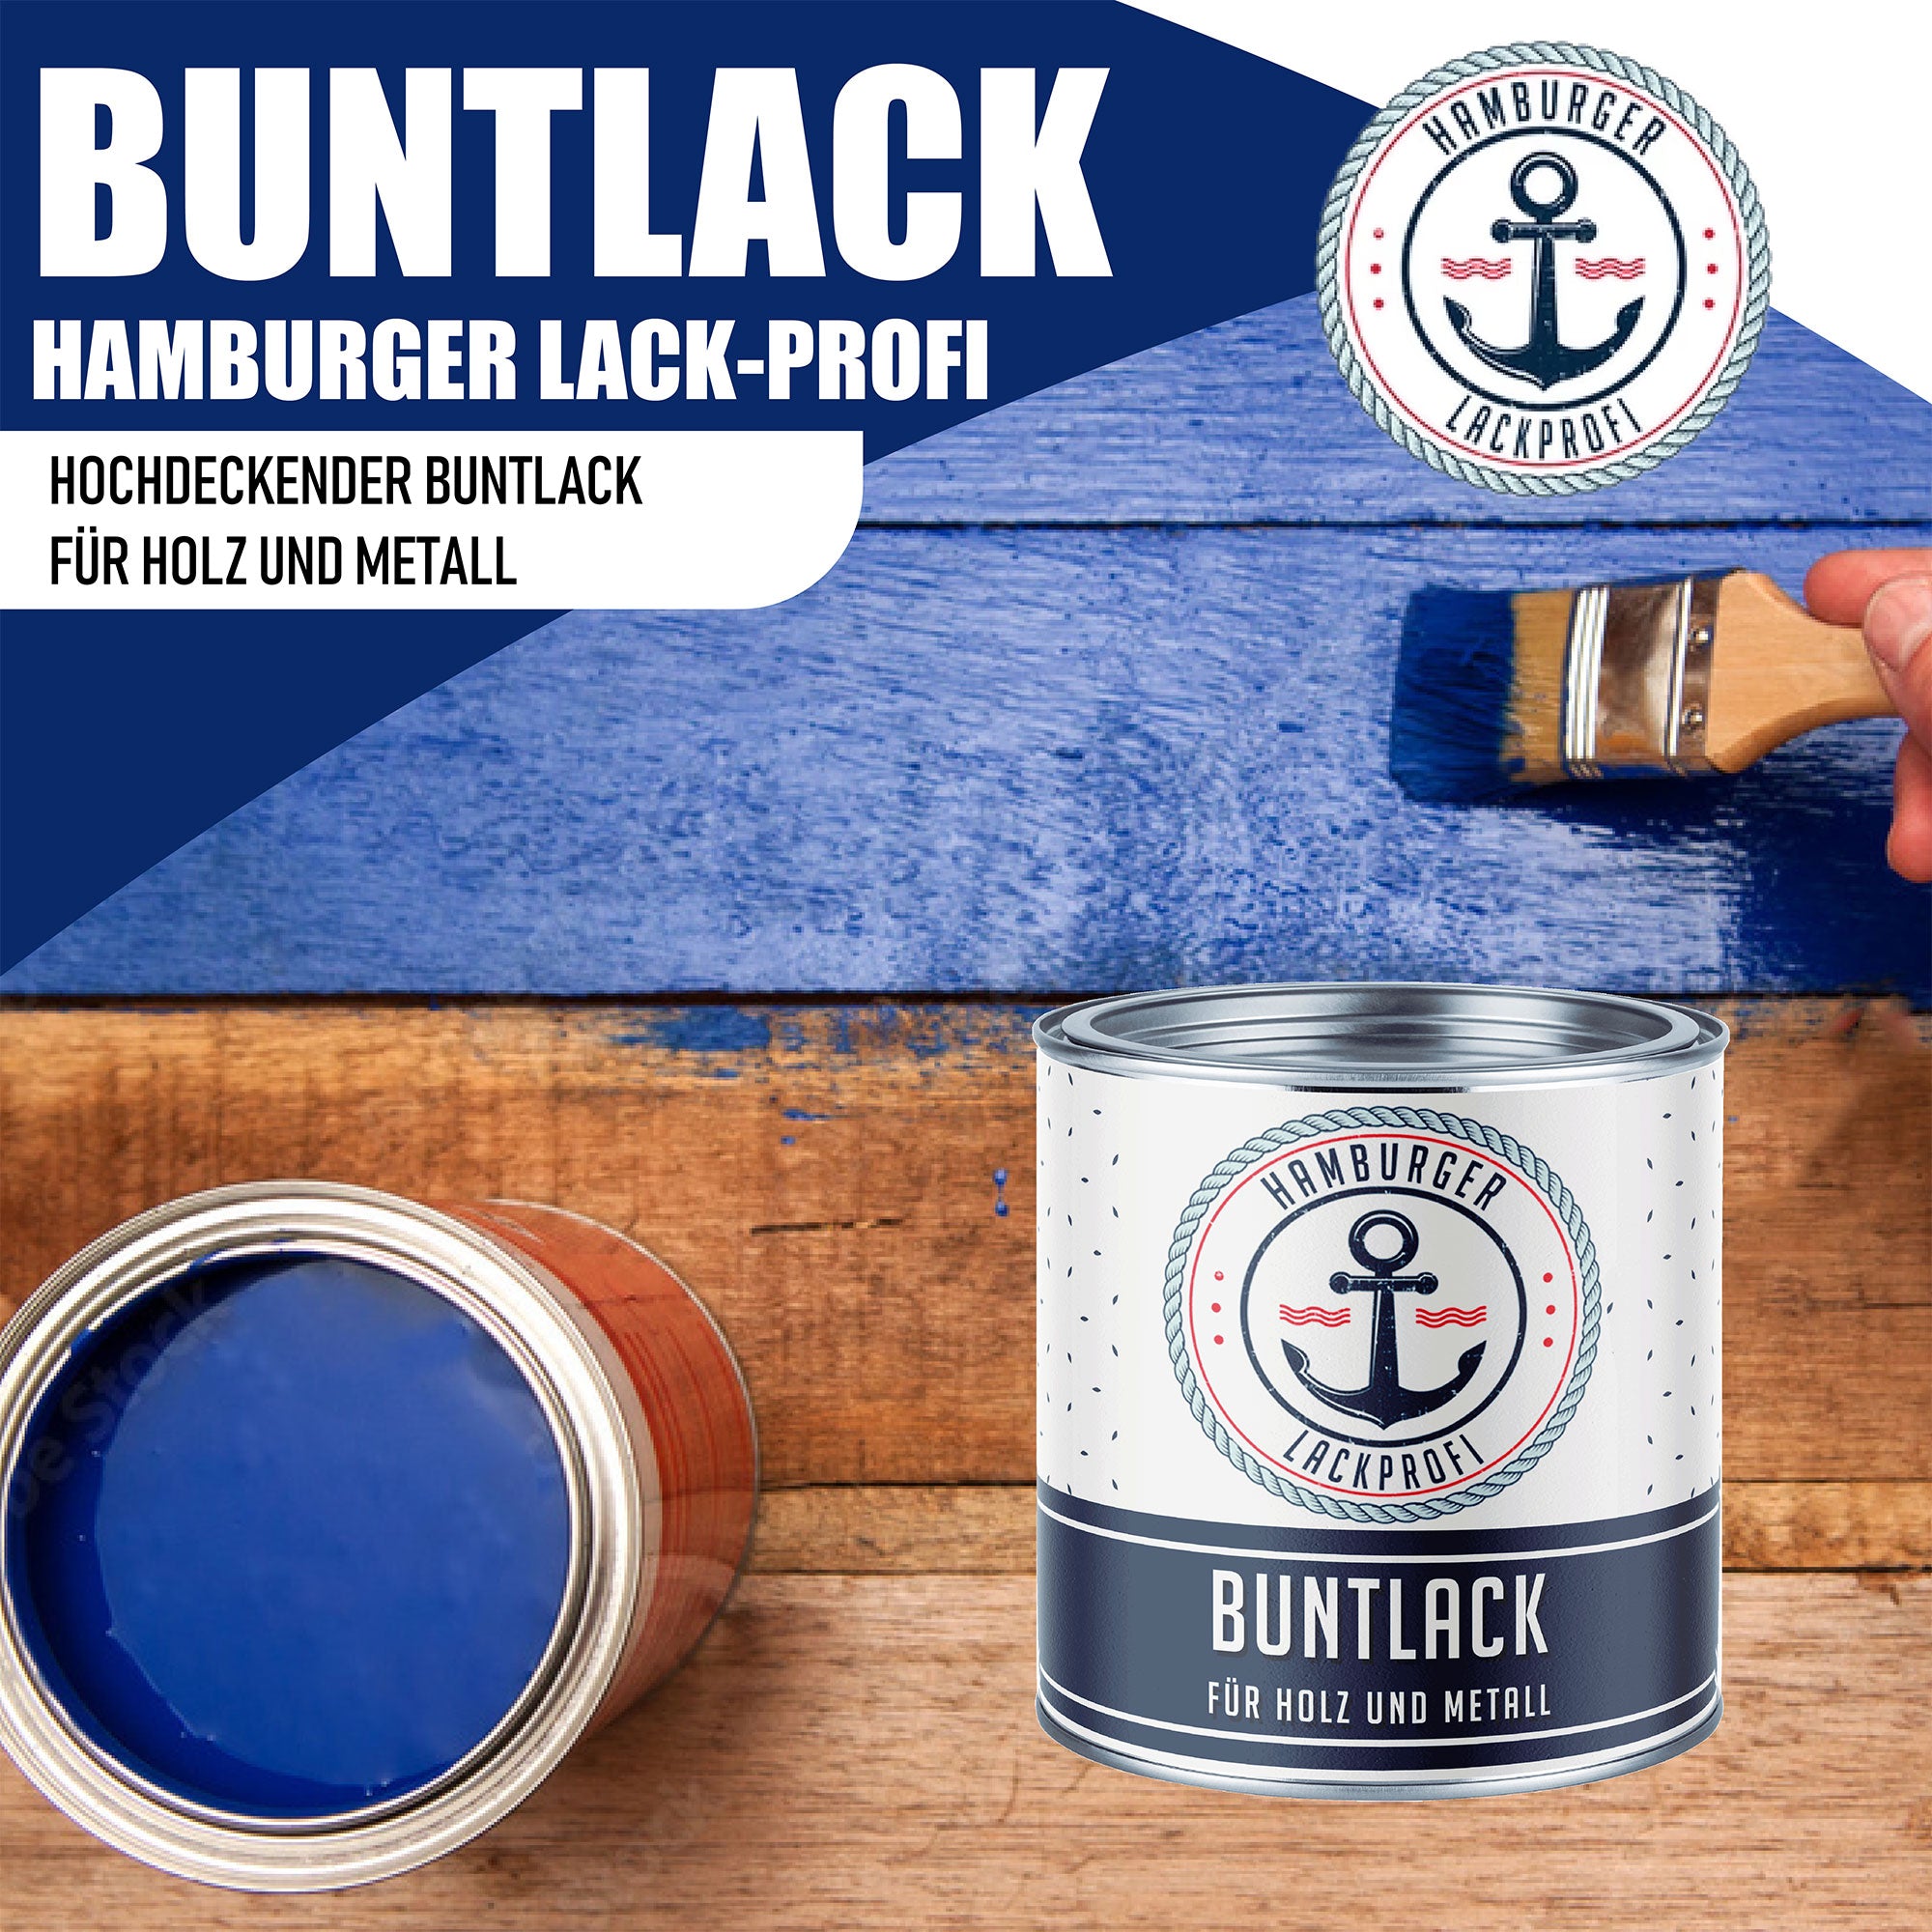 Hamburger Lack-Profi Buntlack Sepiabraun RAL 8014 - Robuster Kunstharzlack